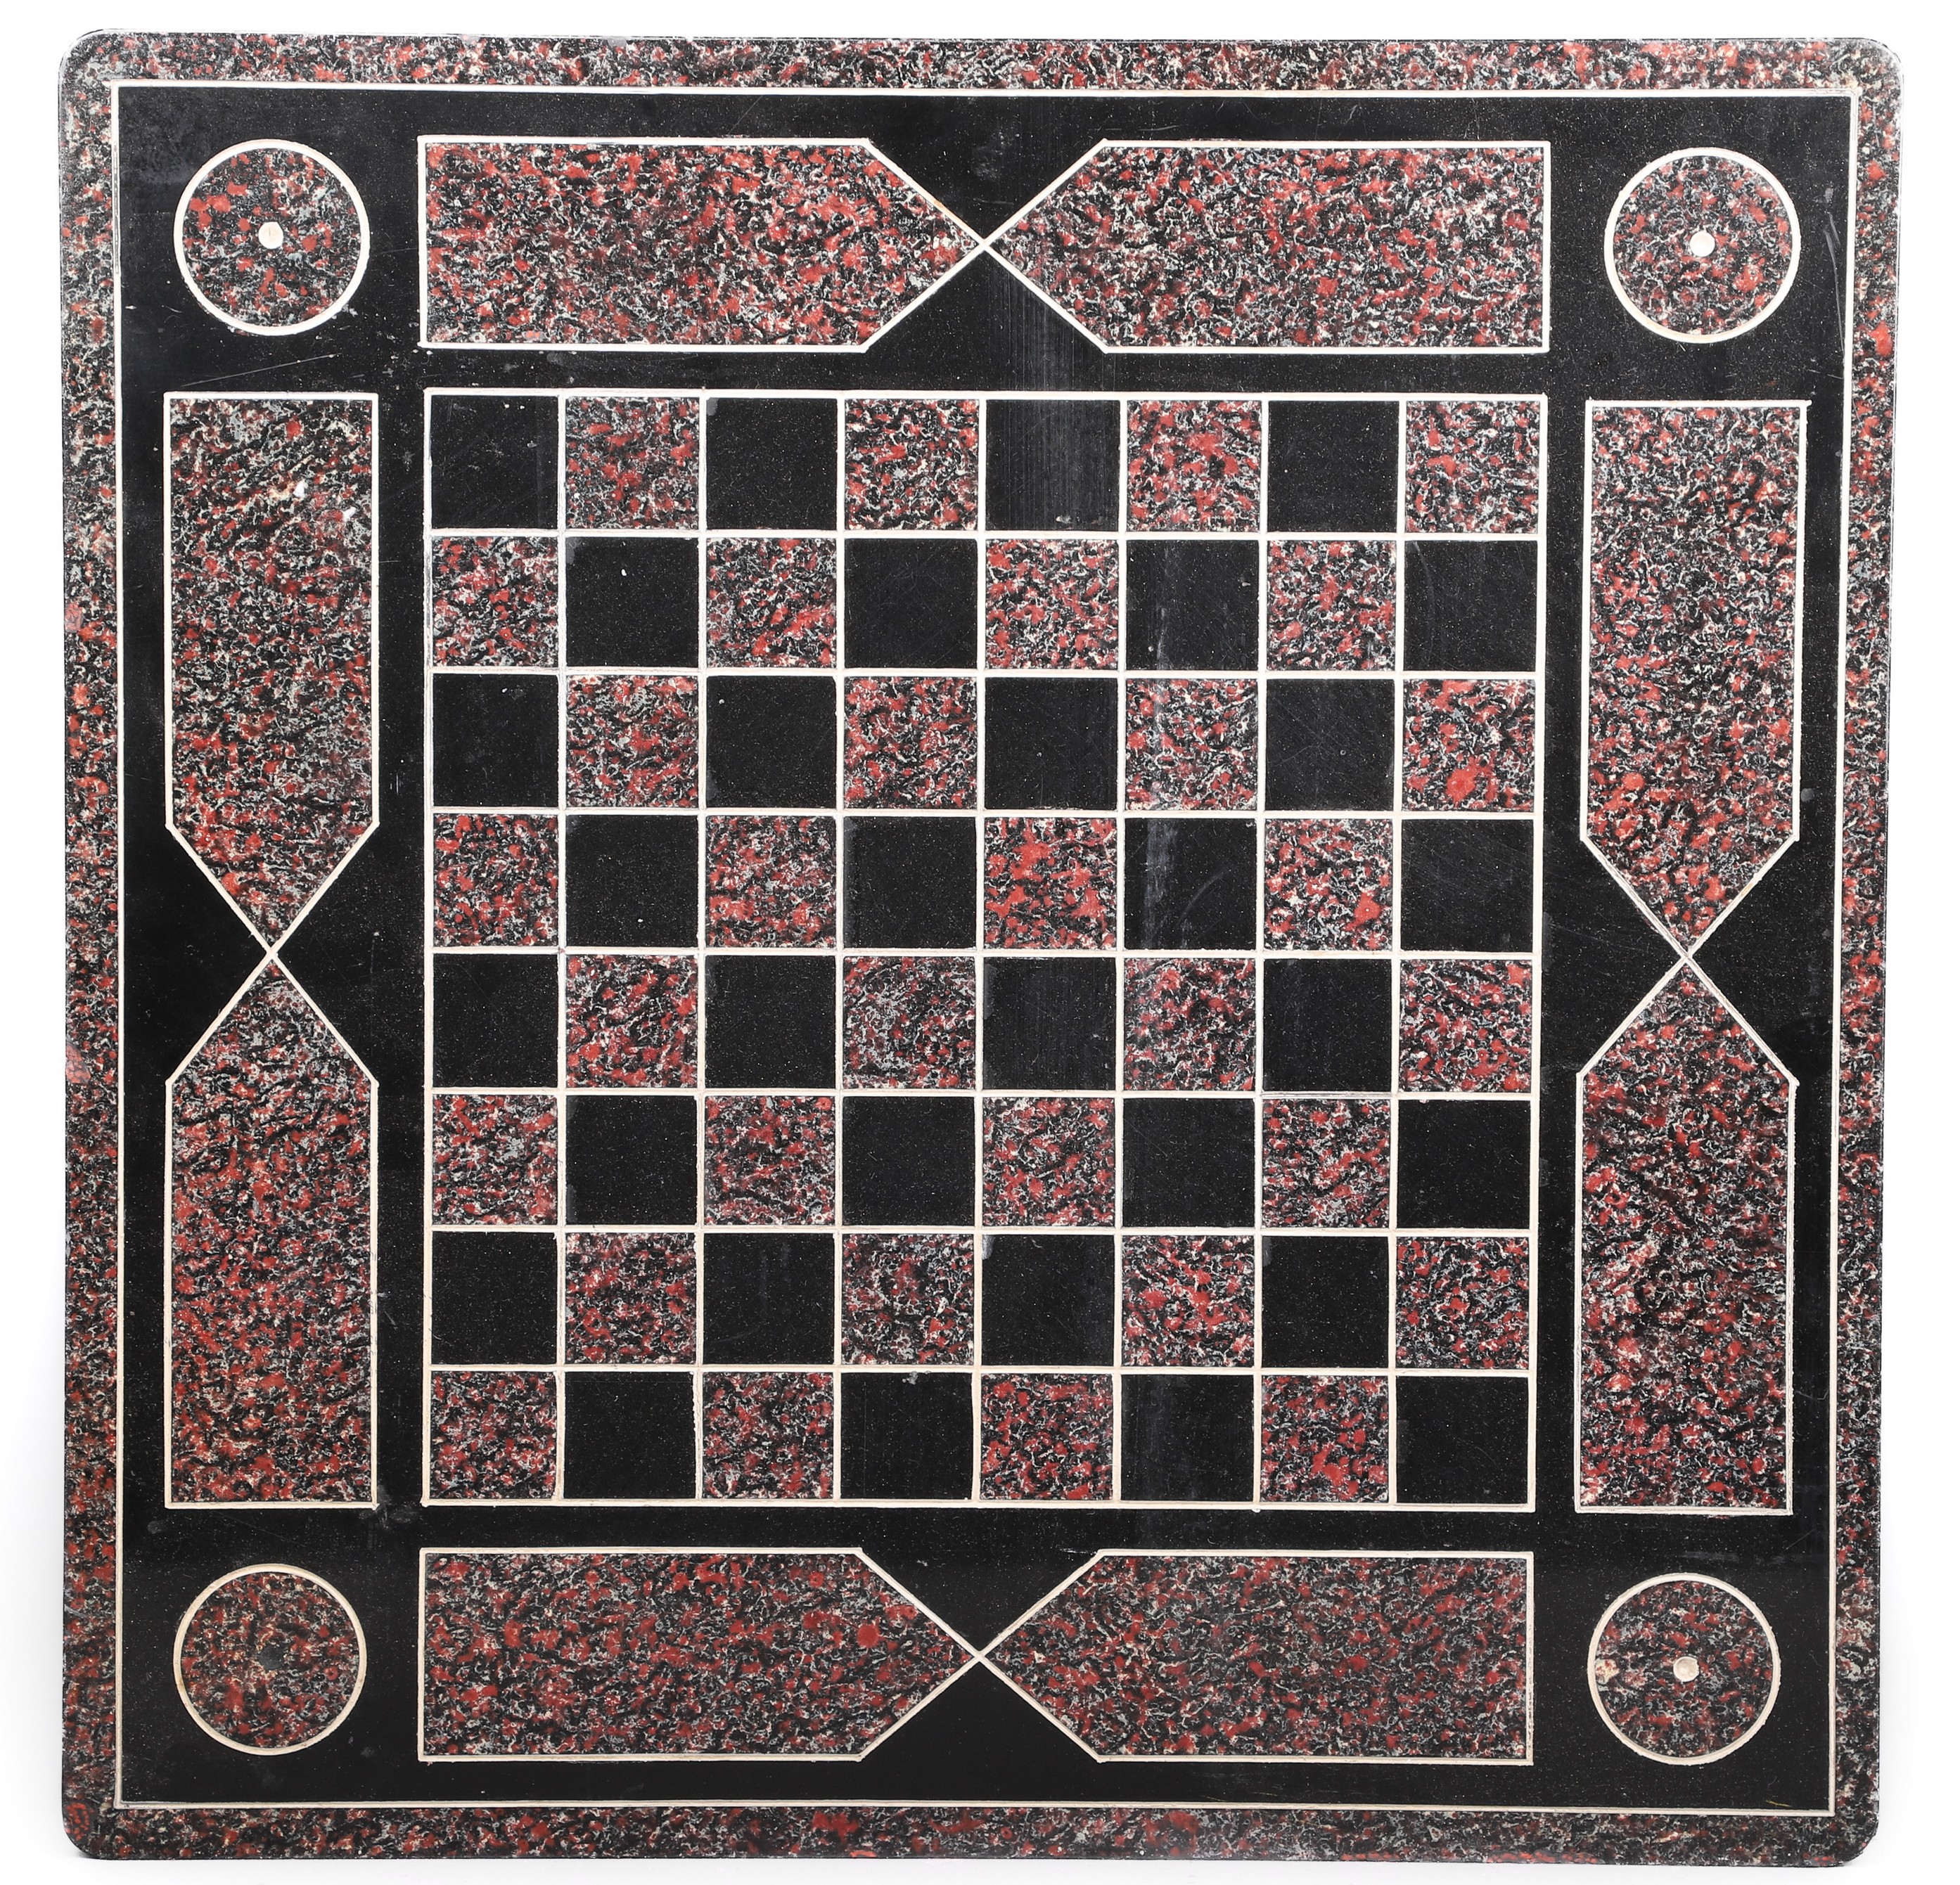 Marbleized slate game board, in